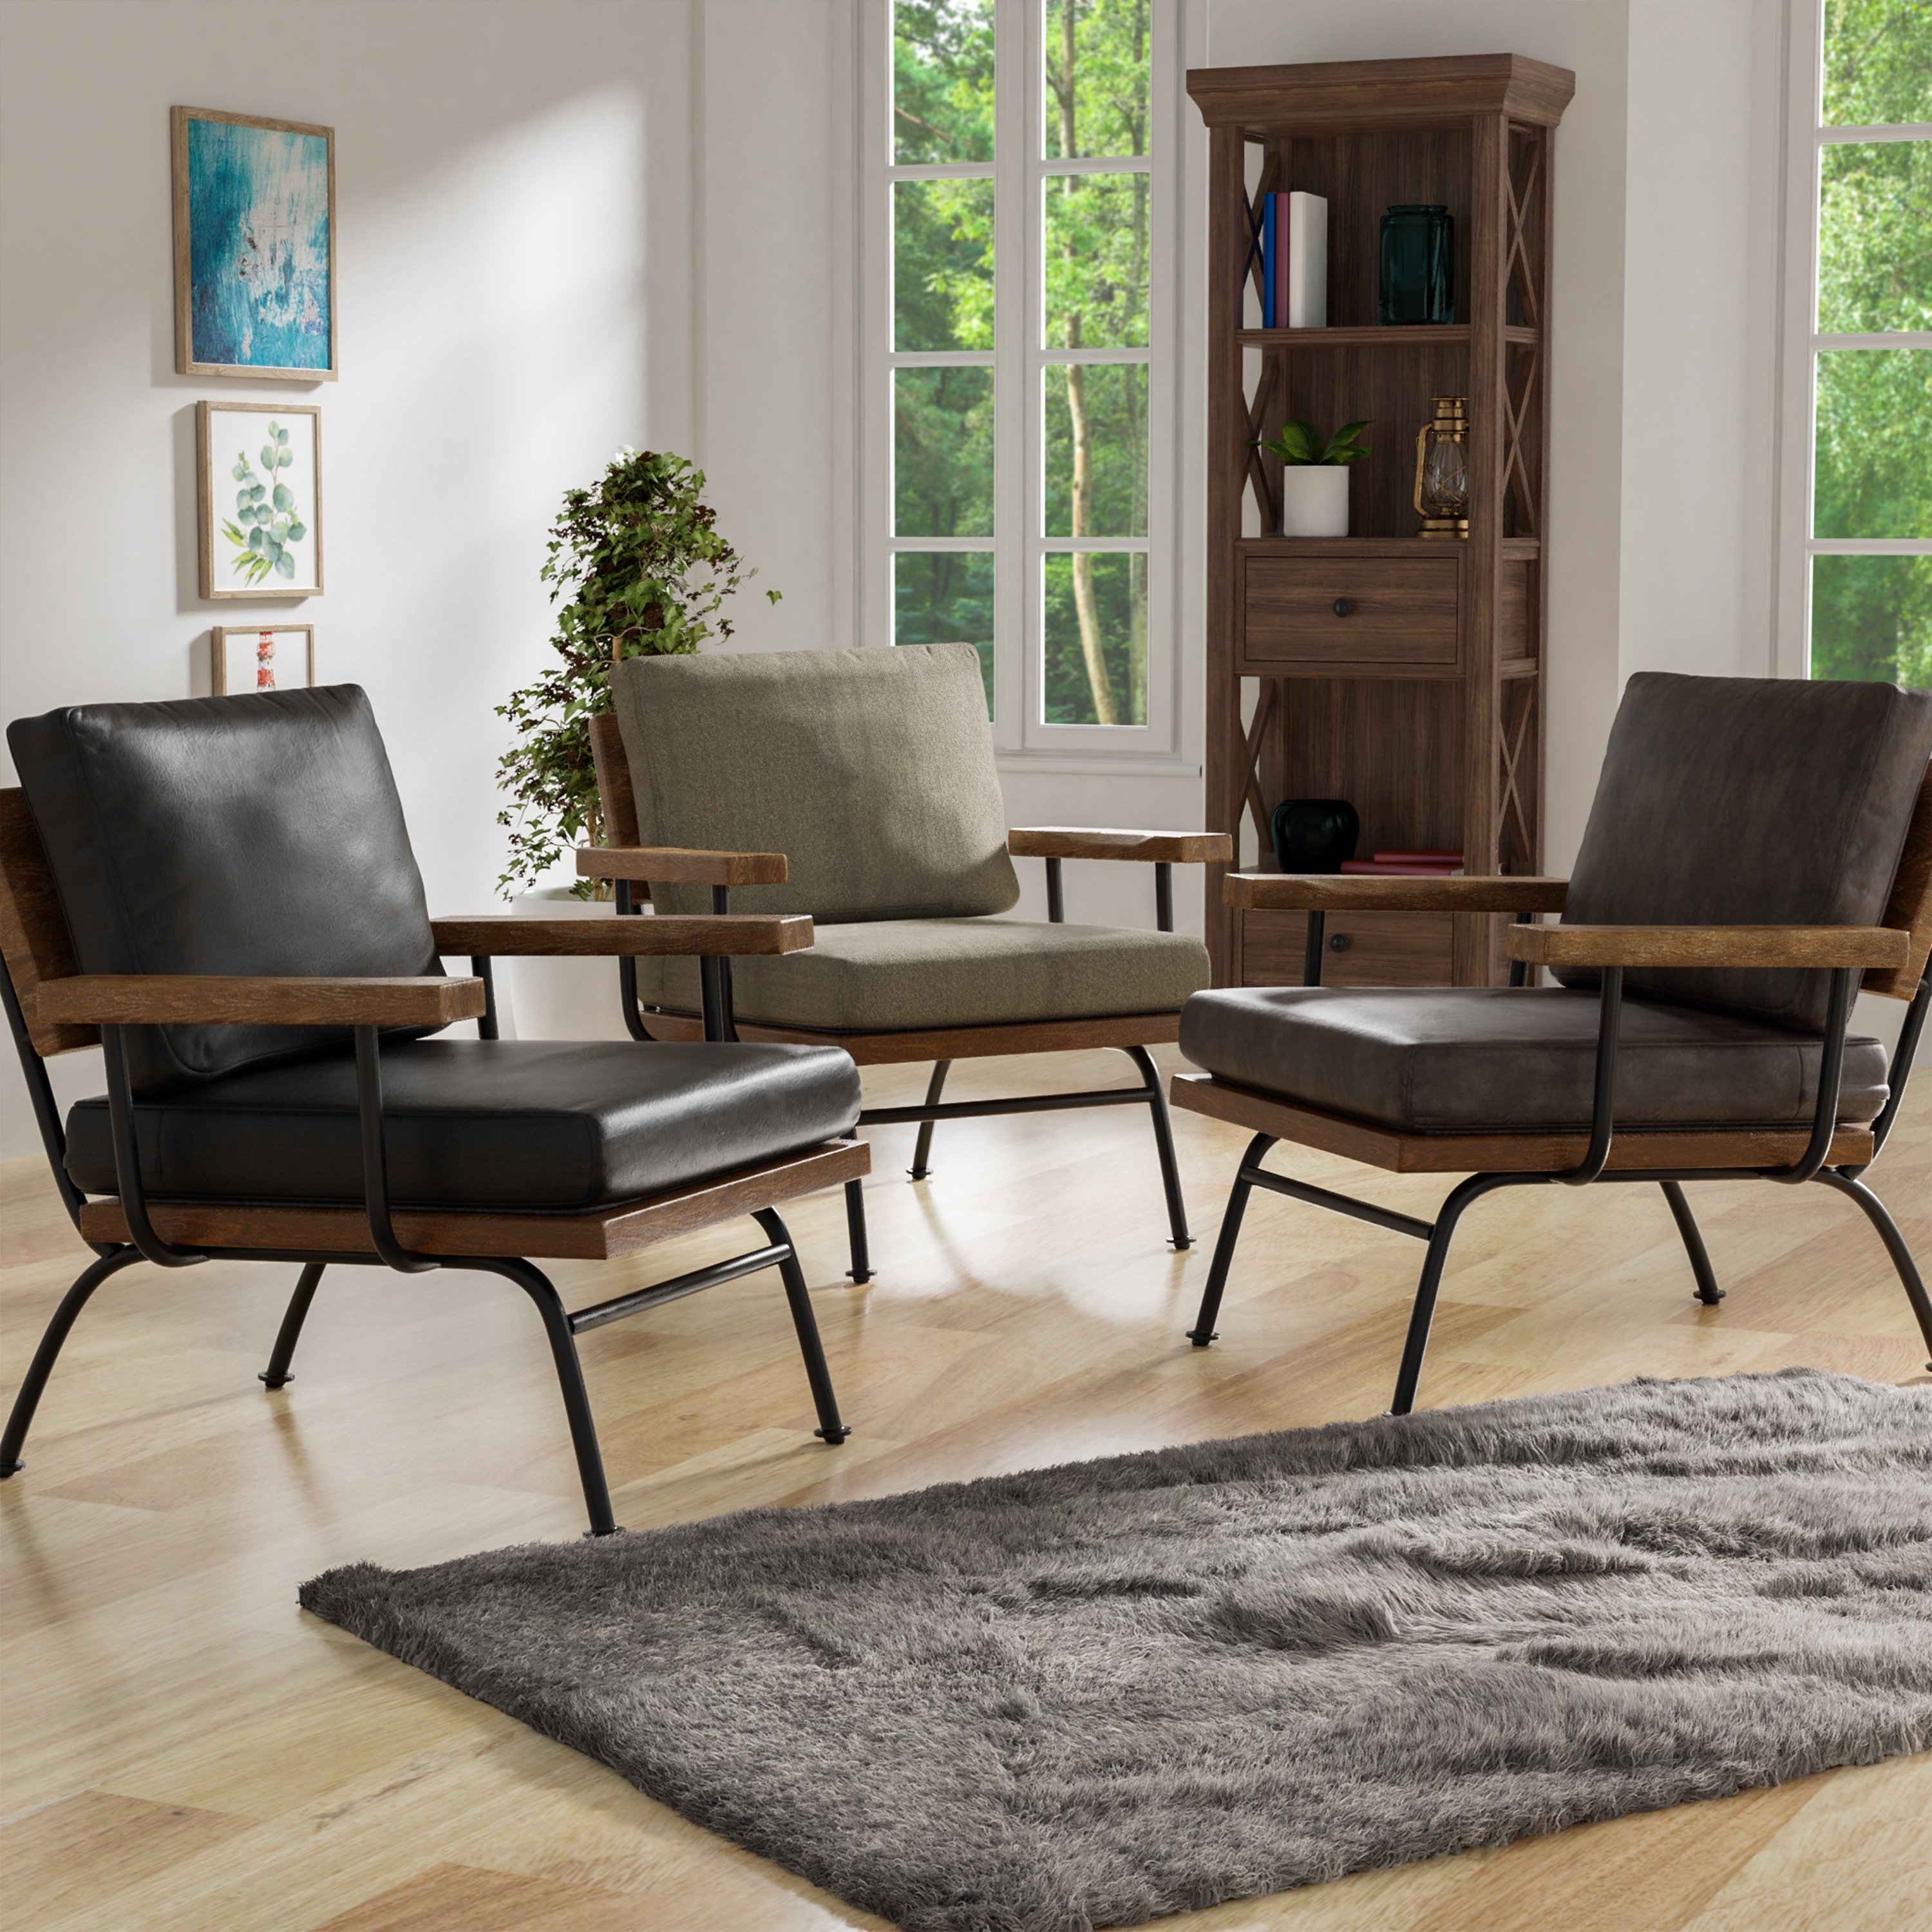 Furniture of America Bice Industrial Accent Chair | eBay